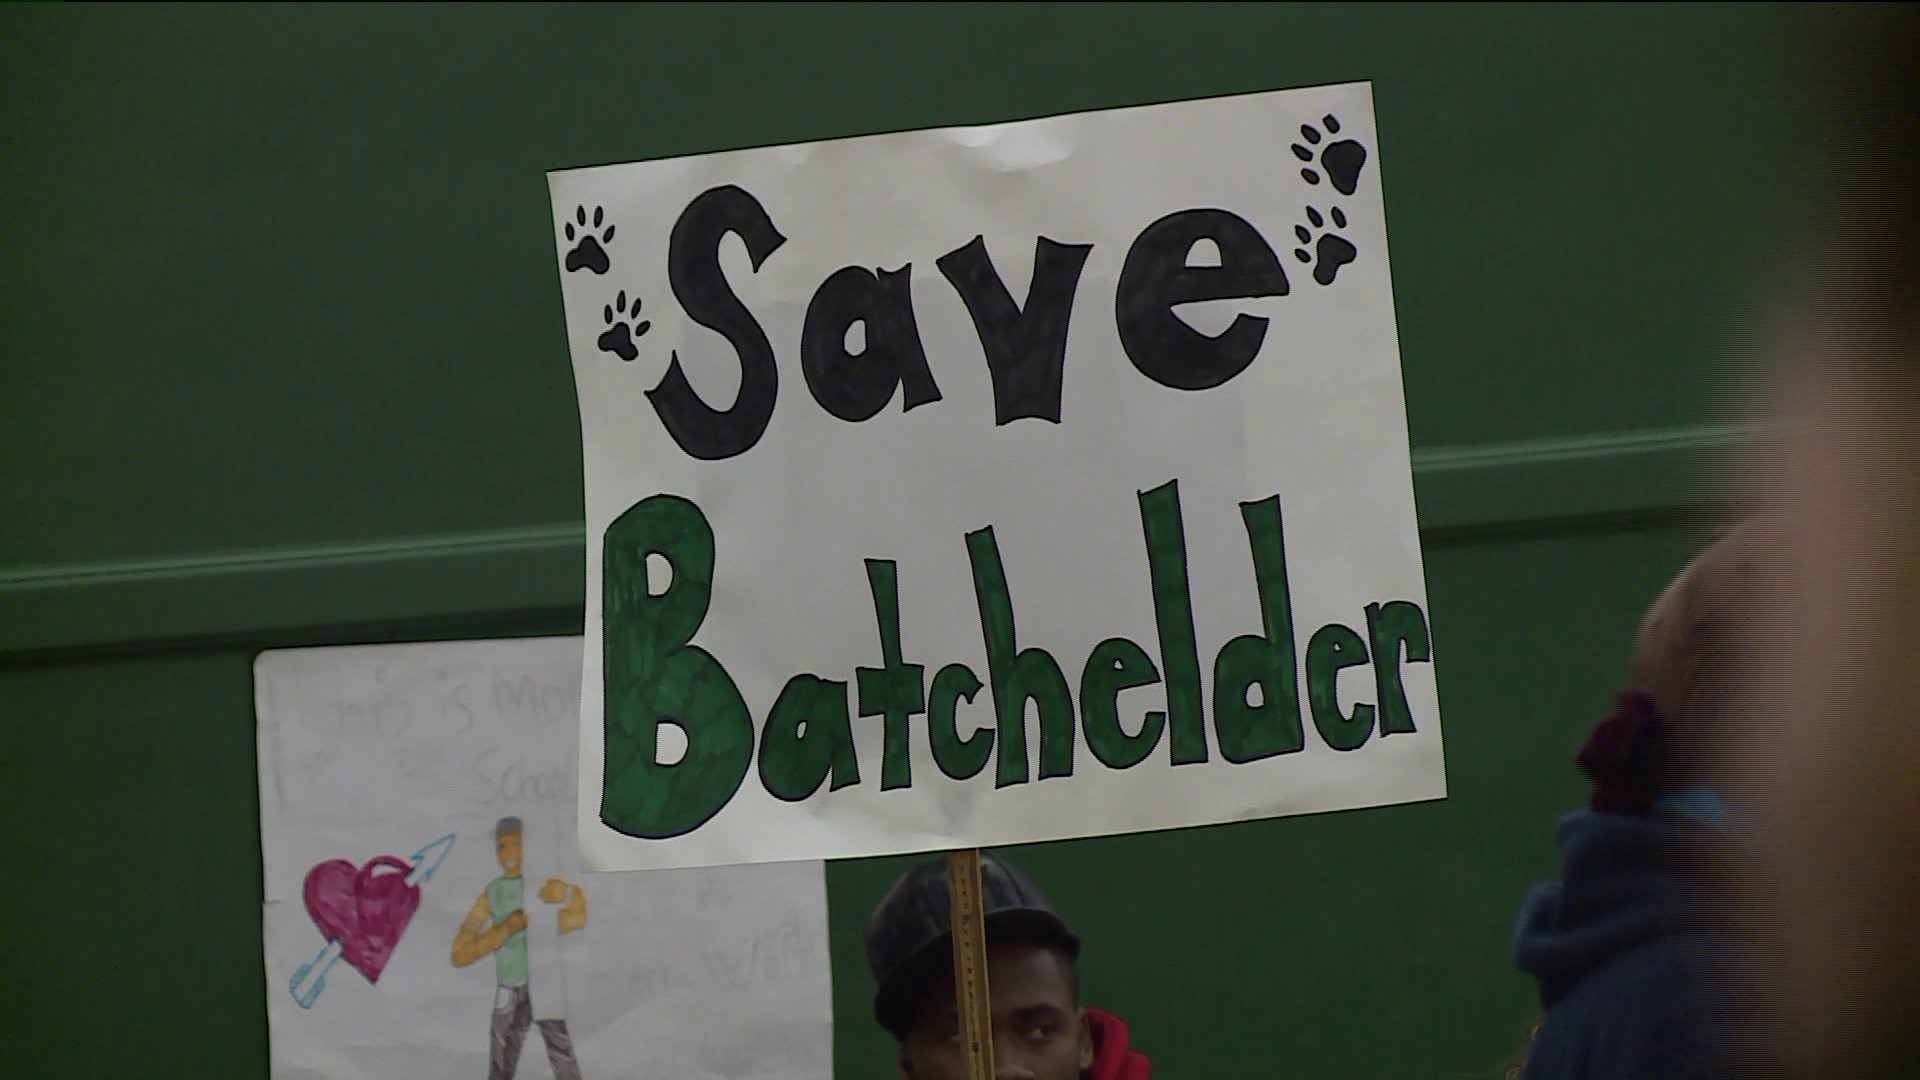 Community leaders speak out against proposal to keep Batchelder Elementary School open